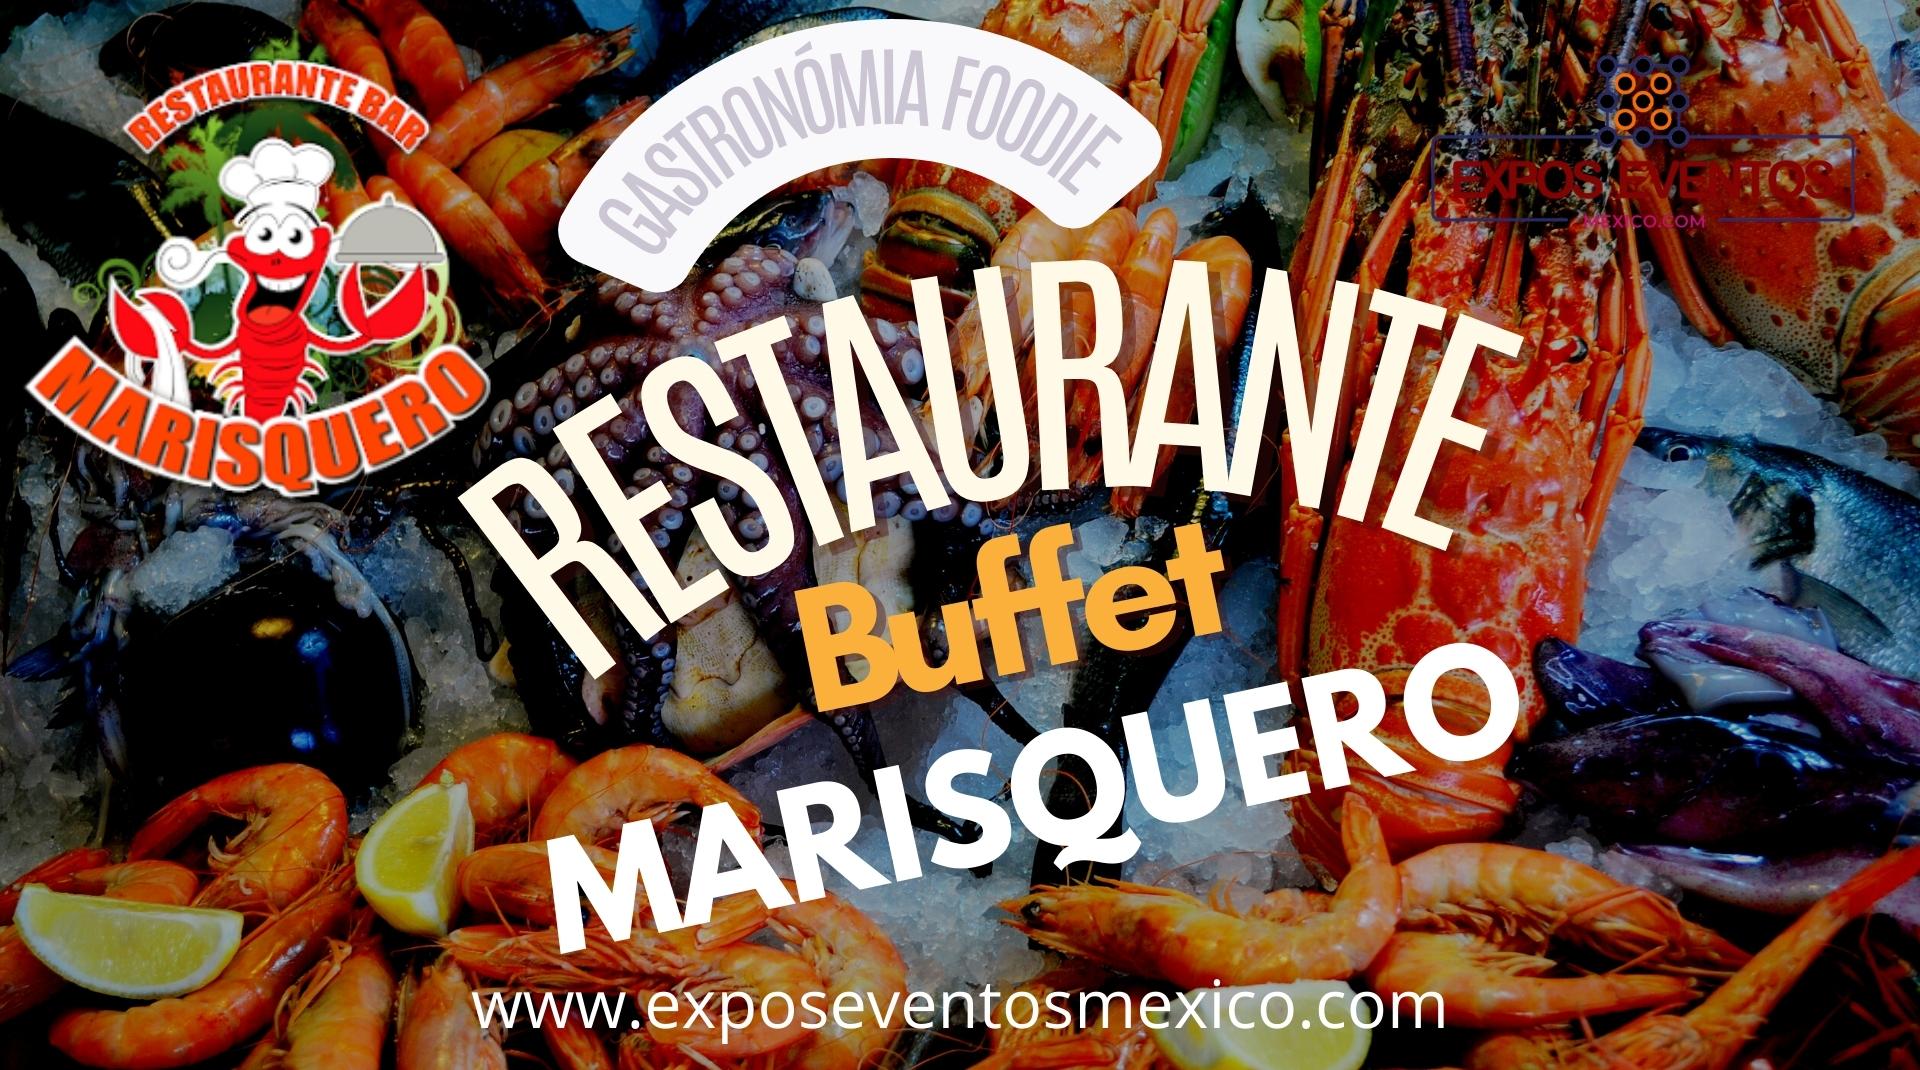 Restaurante Buffet el Marisquero Miramontes CDMX, Restaurante Mariscos Marisquero, Restaurante Marisquero, Buffet Marisquero